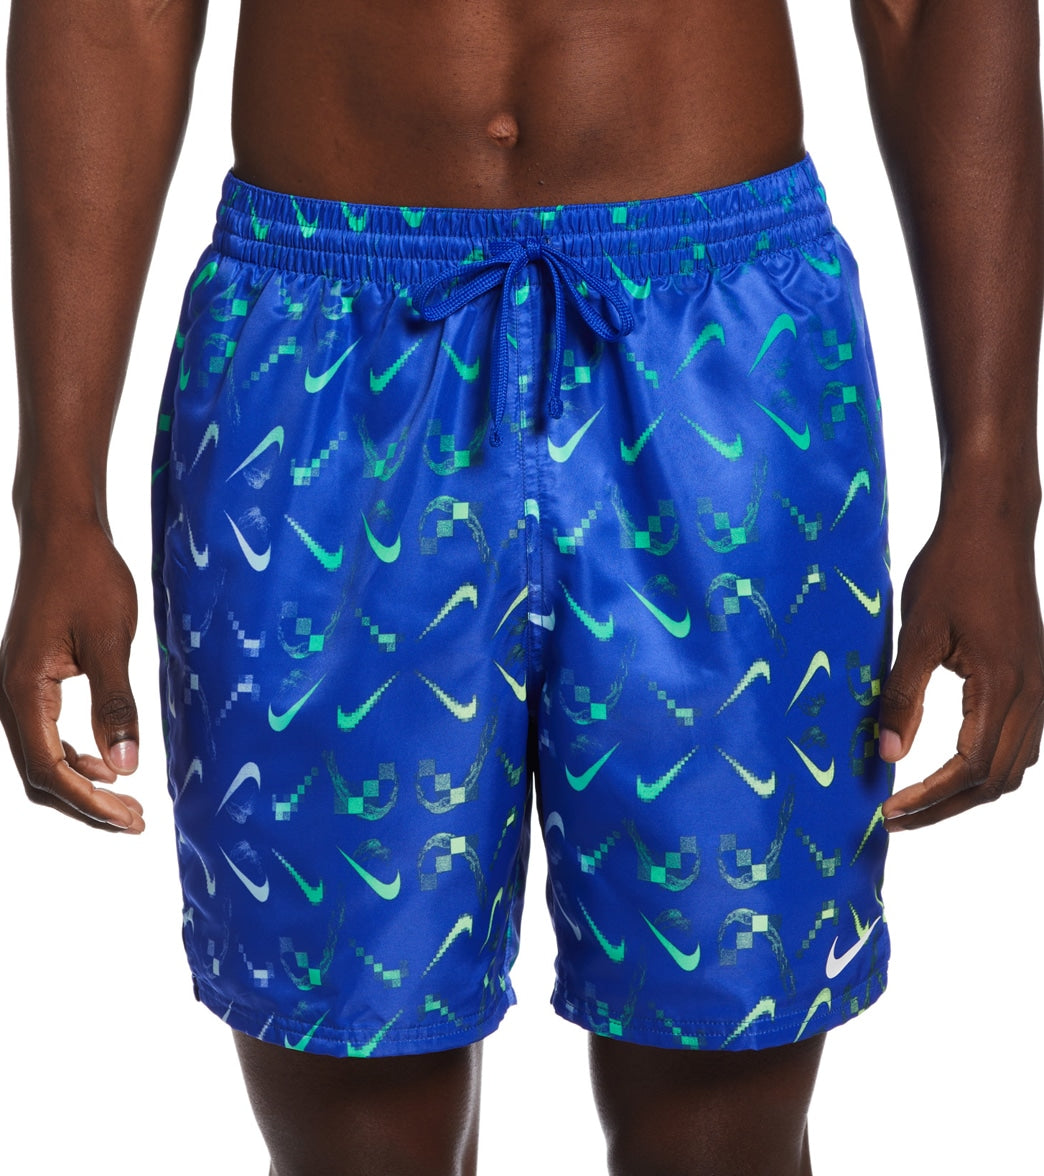 ir al trabajo sonriendo Meandro Nike Men's Digi Swoosh Ombre Lap Swim Trunks at SwimOutlet.com